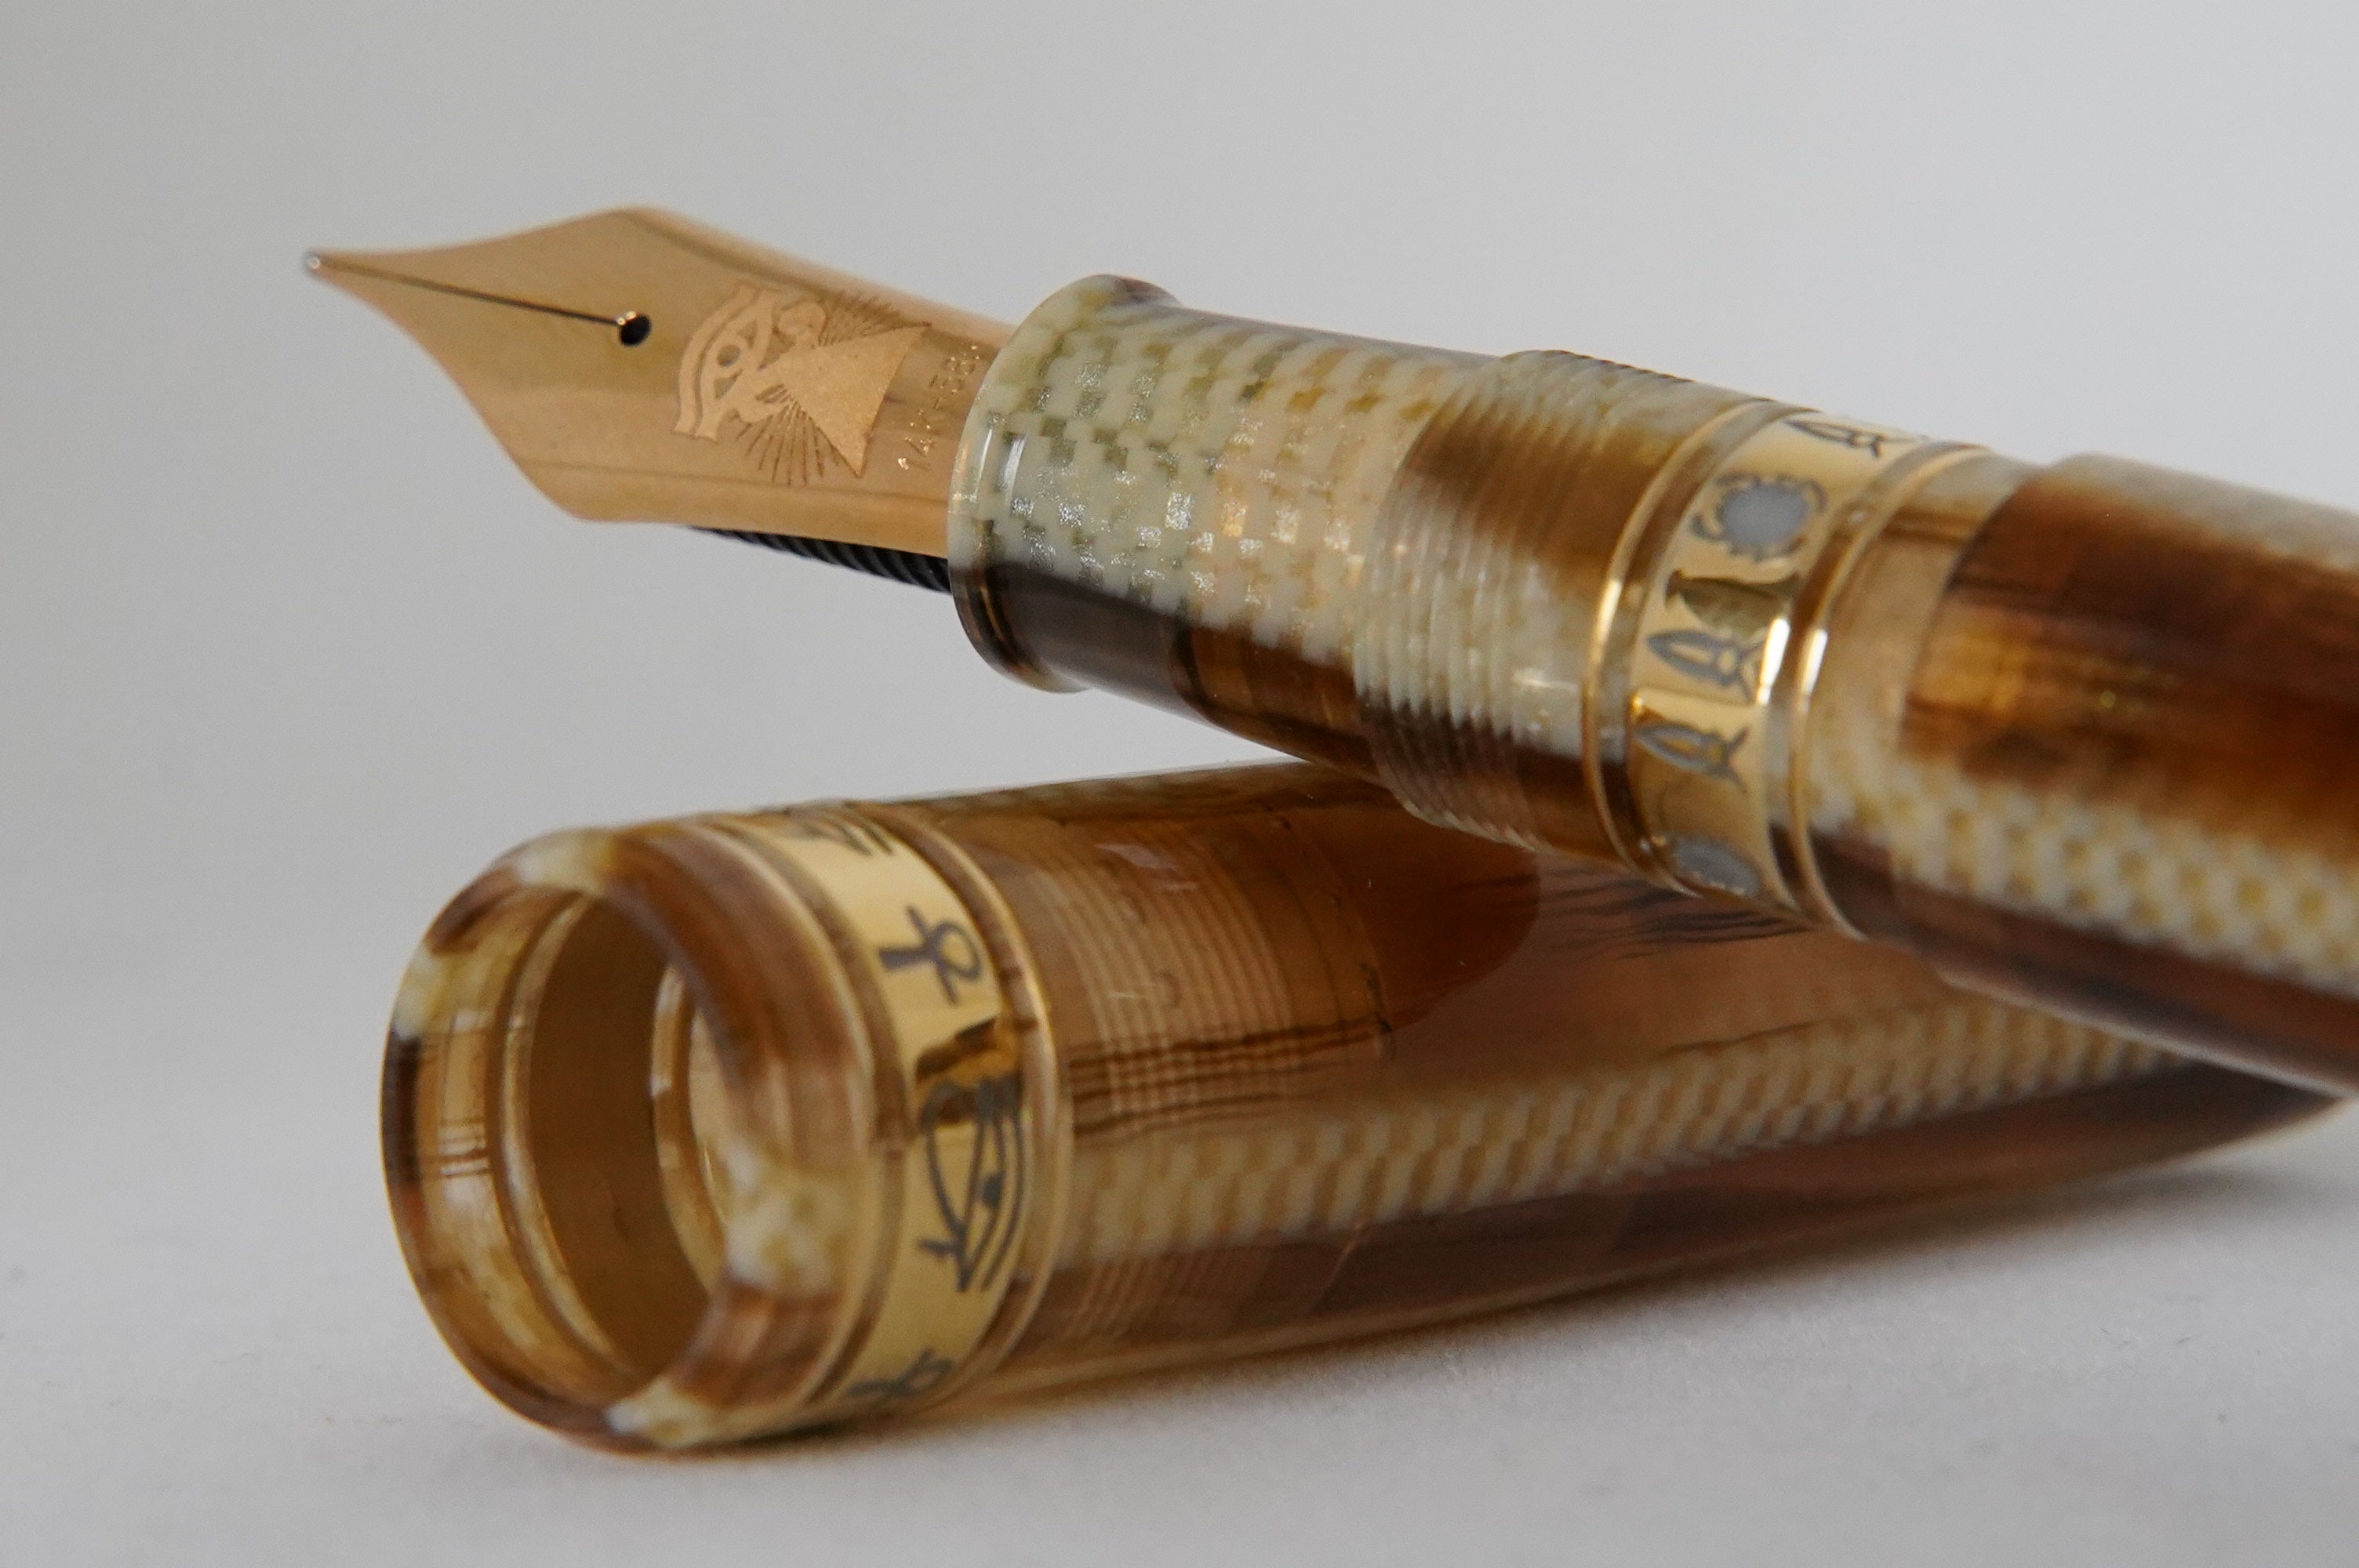 ASC Bologna Extra Egyptian Series Nefertiti Limited Edition of 88 Pens